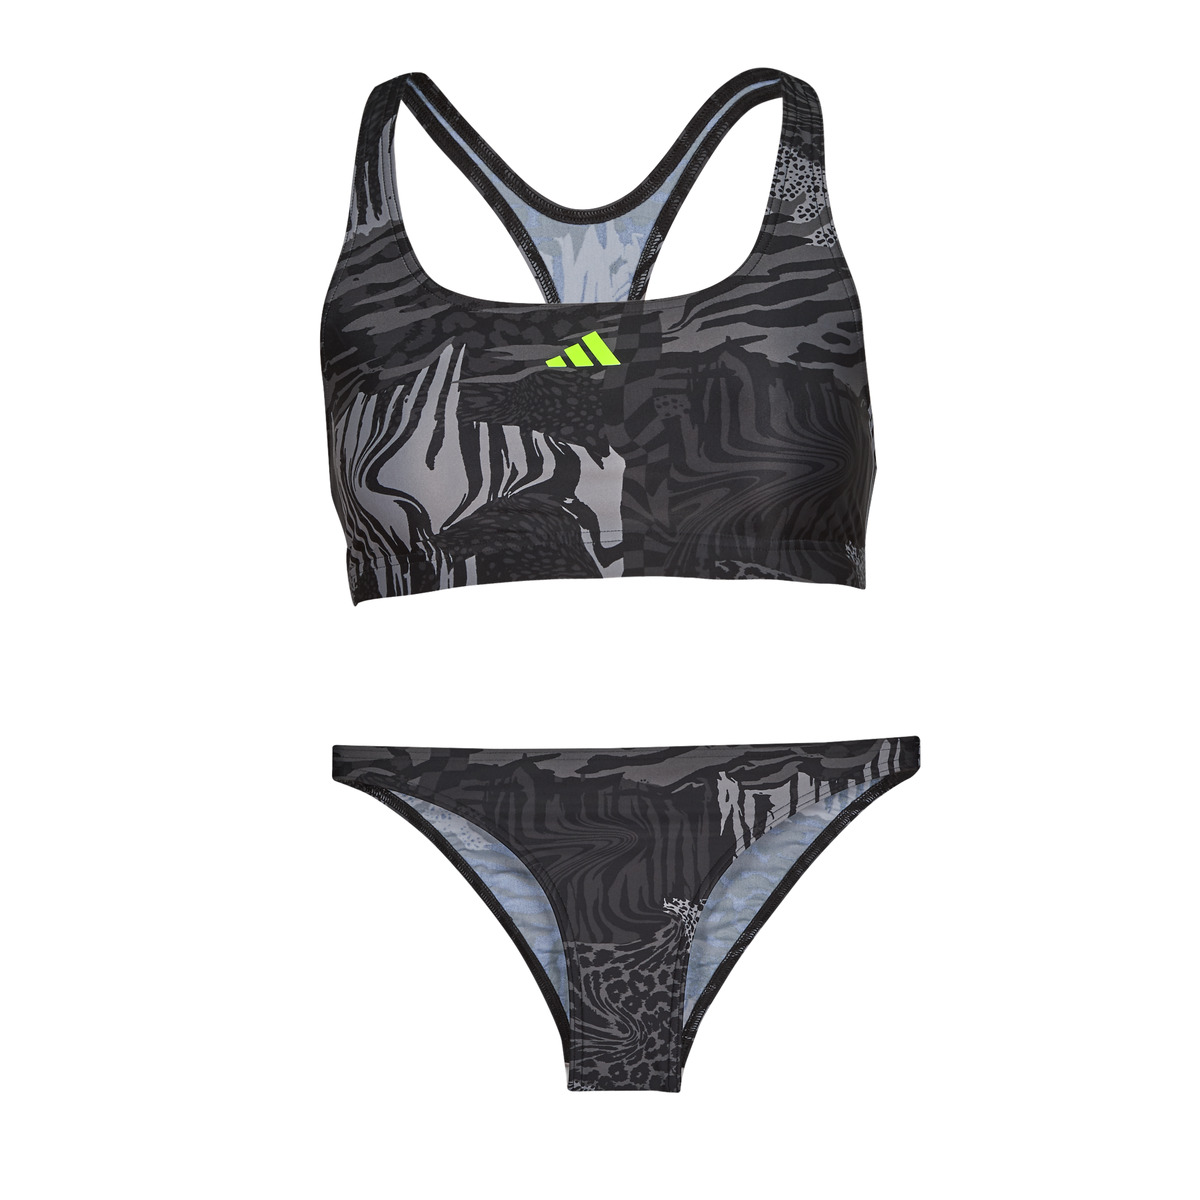 Bunke af Angreb Genveje adidas Performance GRX BIKINI Grey / Black - Free delivery | Spartoo NET !  - Clothing Swimsuits Women USD/$49.50